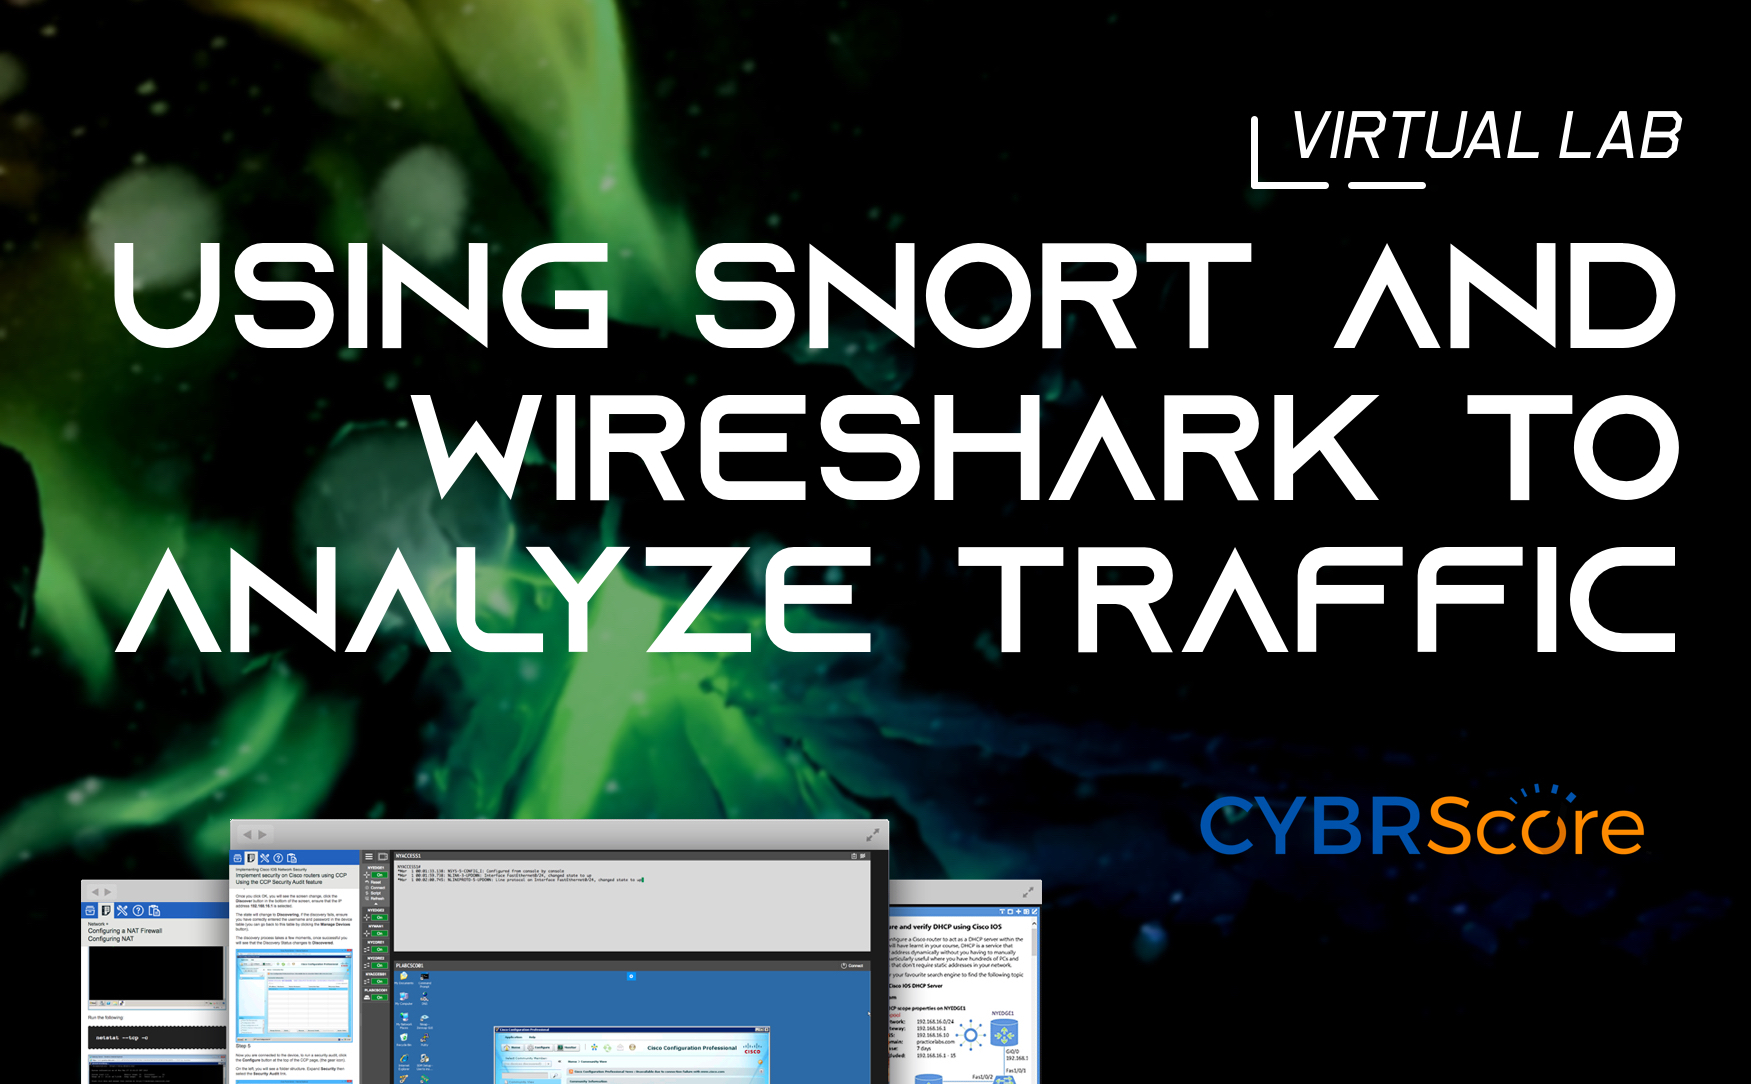 wireshark certified network analyst certification